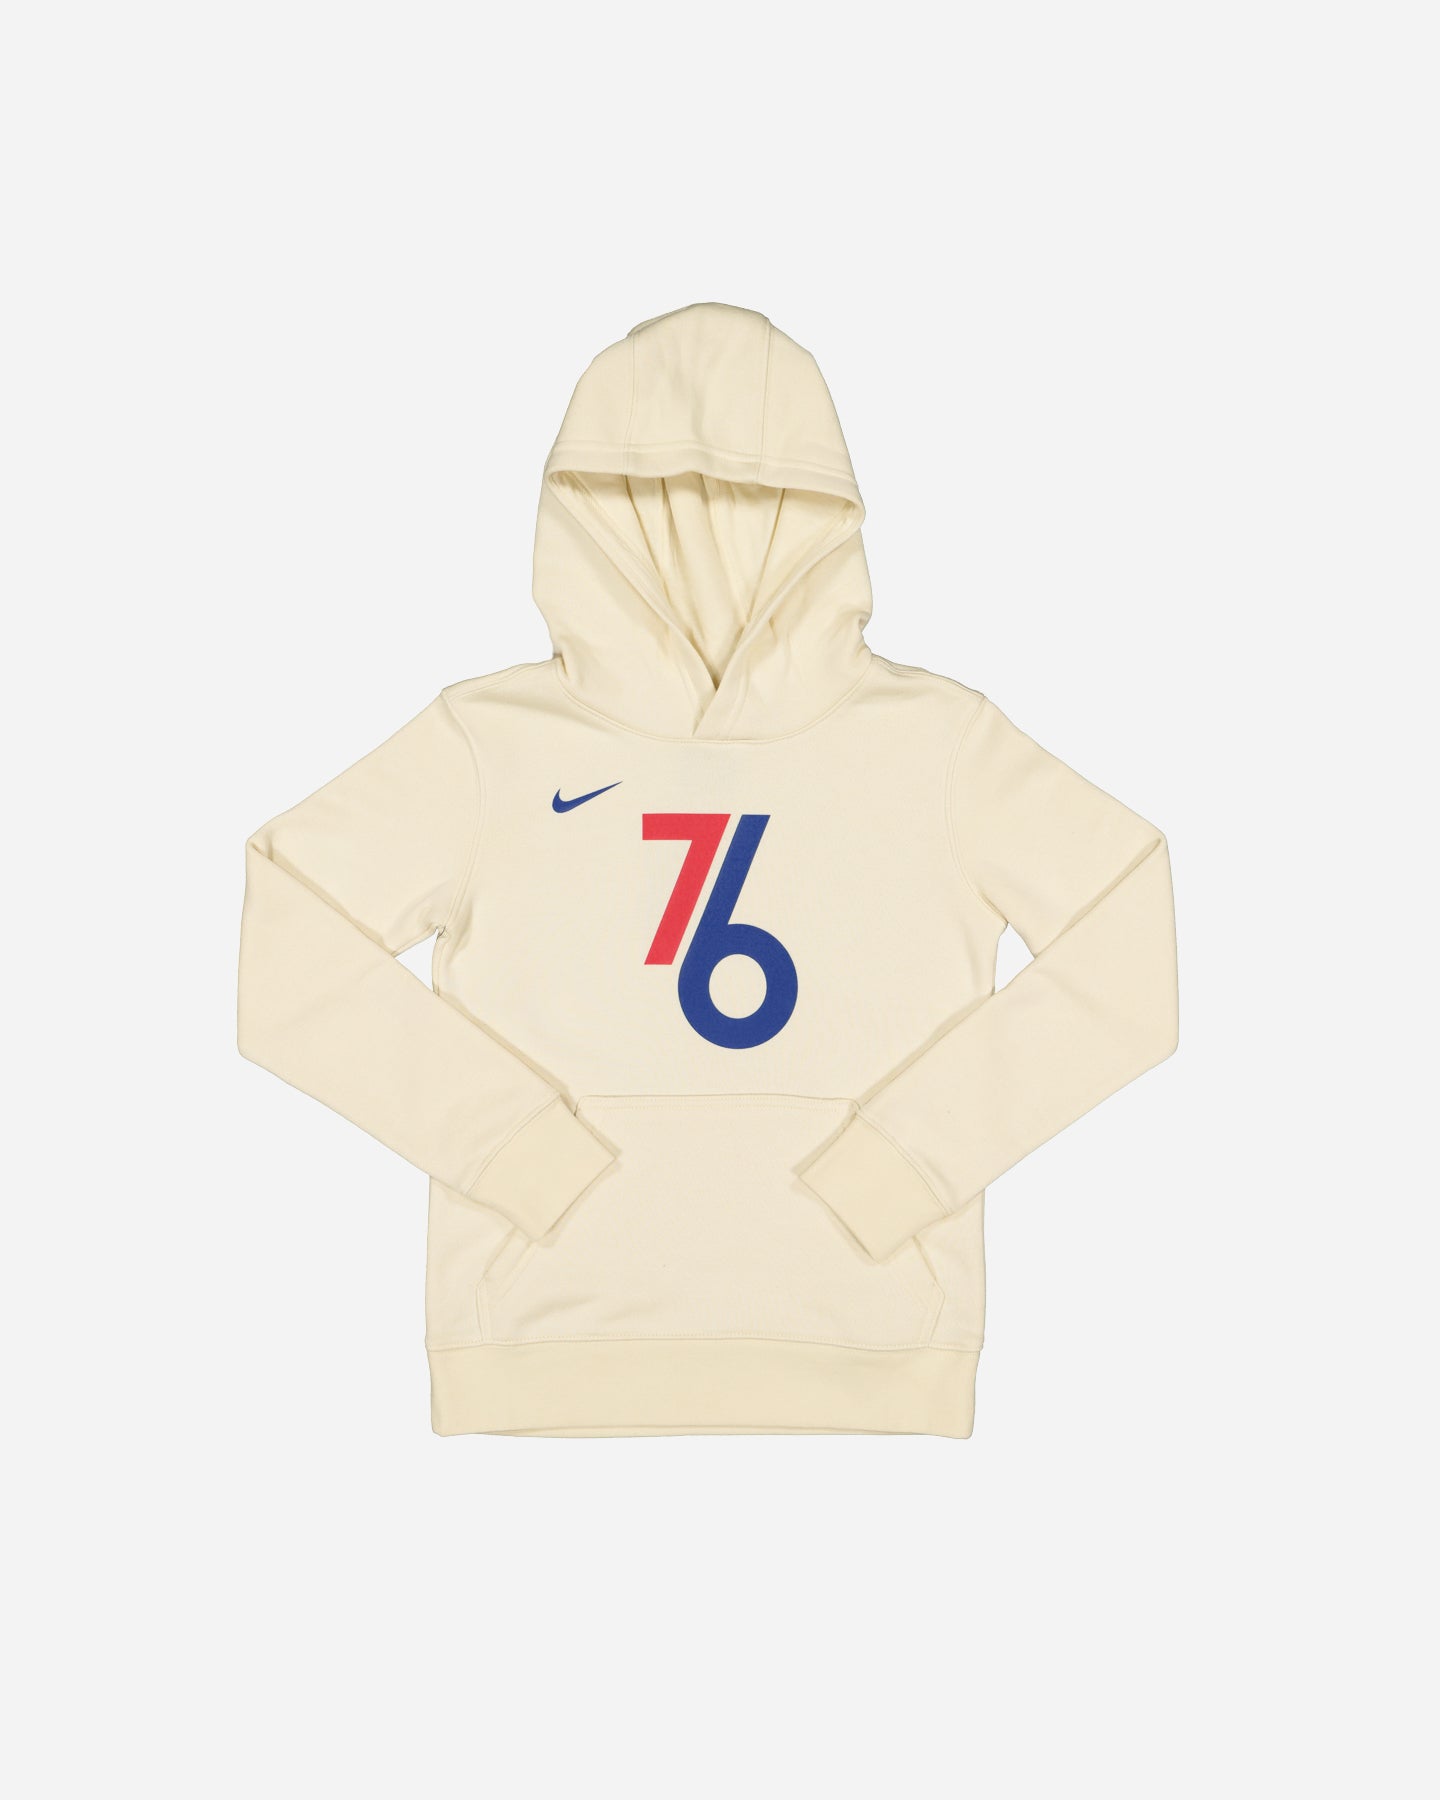 76ers city edition hoodie cream